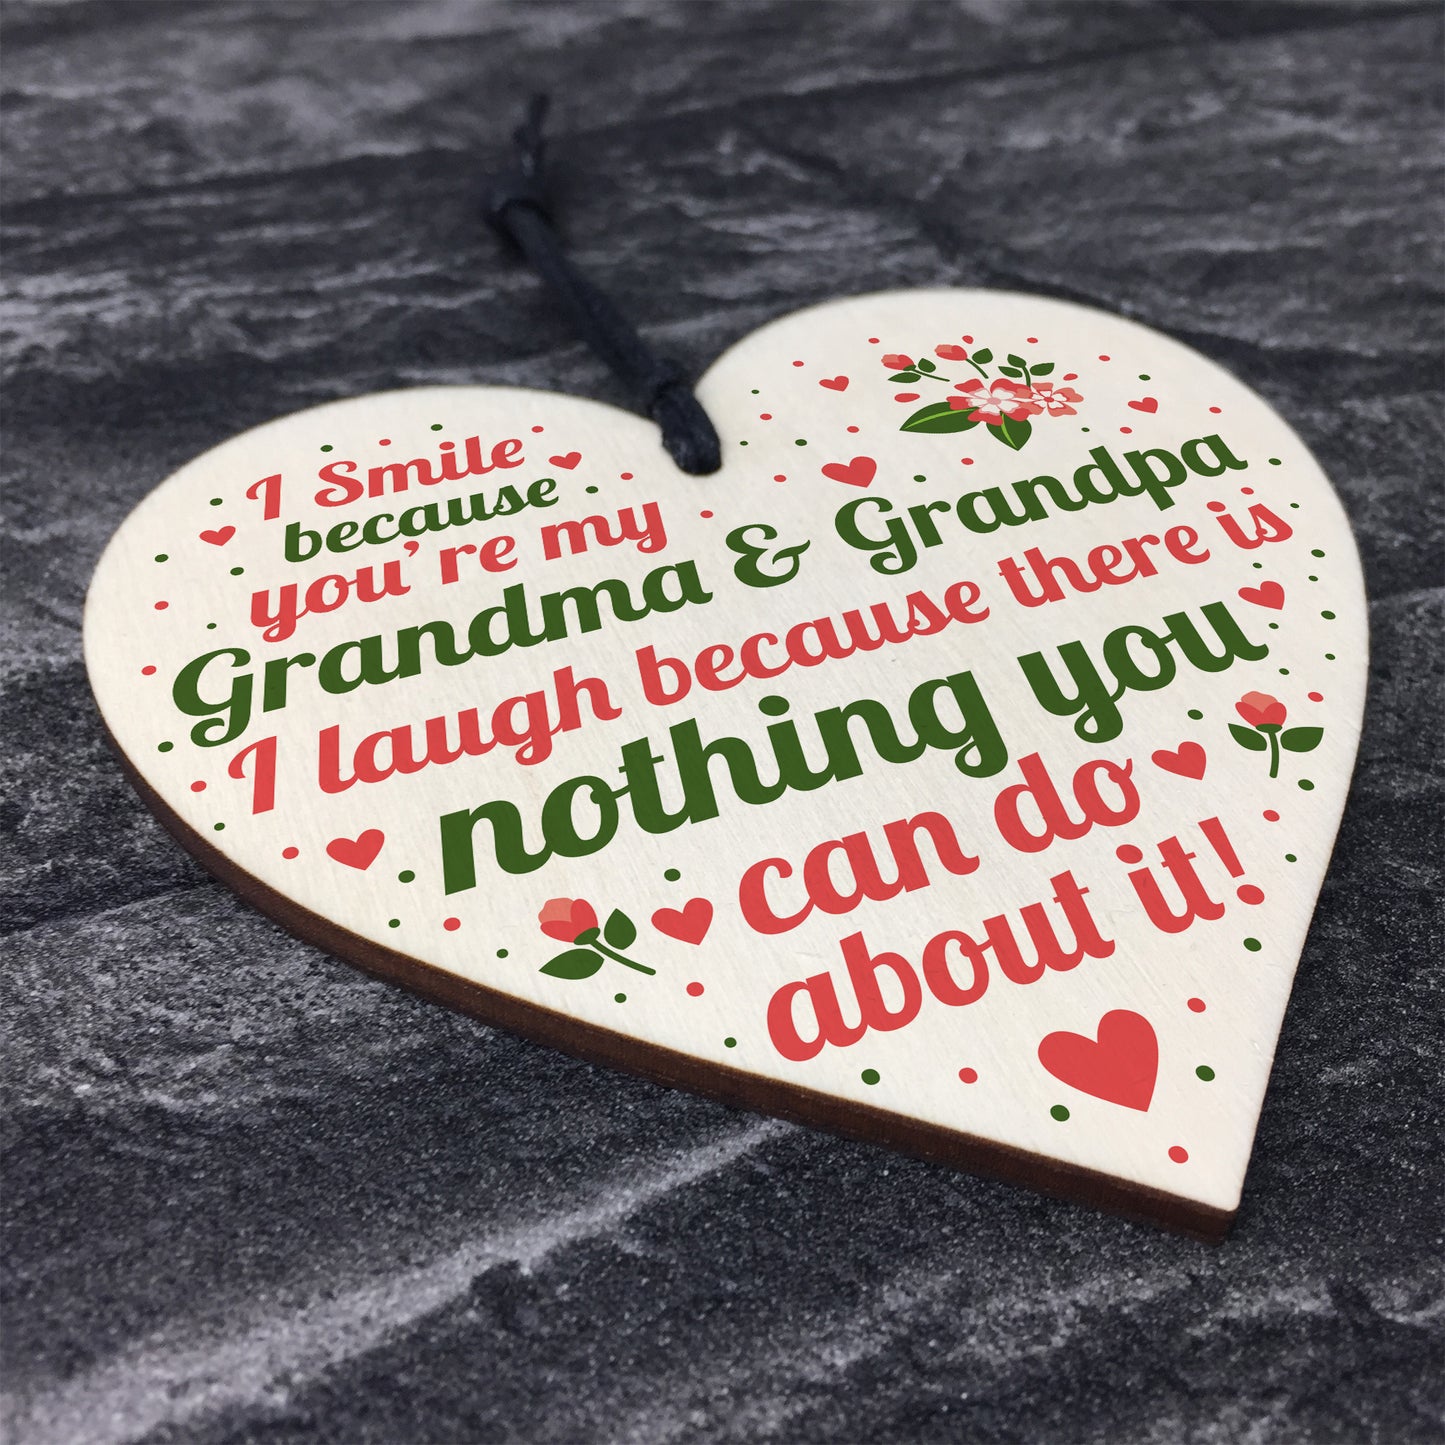 Gifts For Grandma Grandpa Birthday Christmas Heart THANK YOU